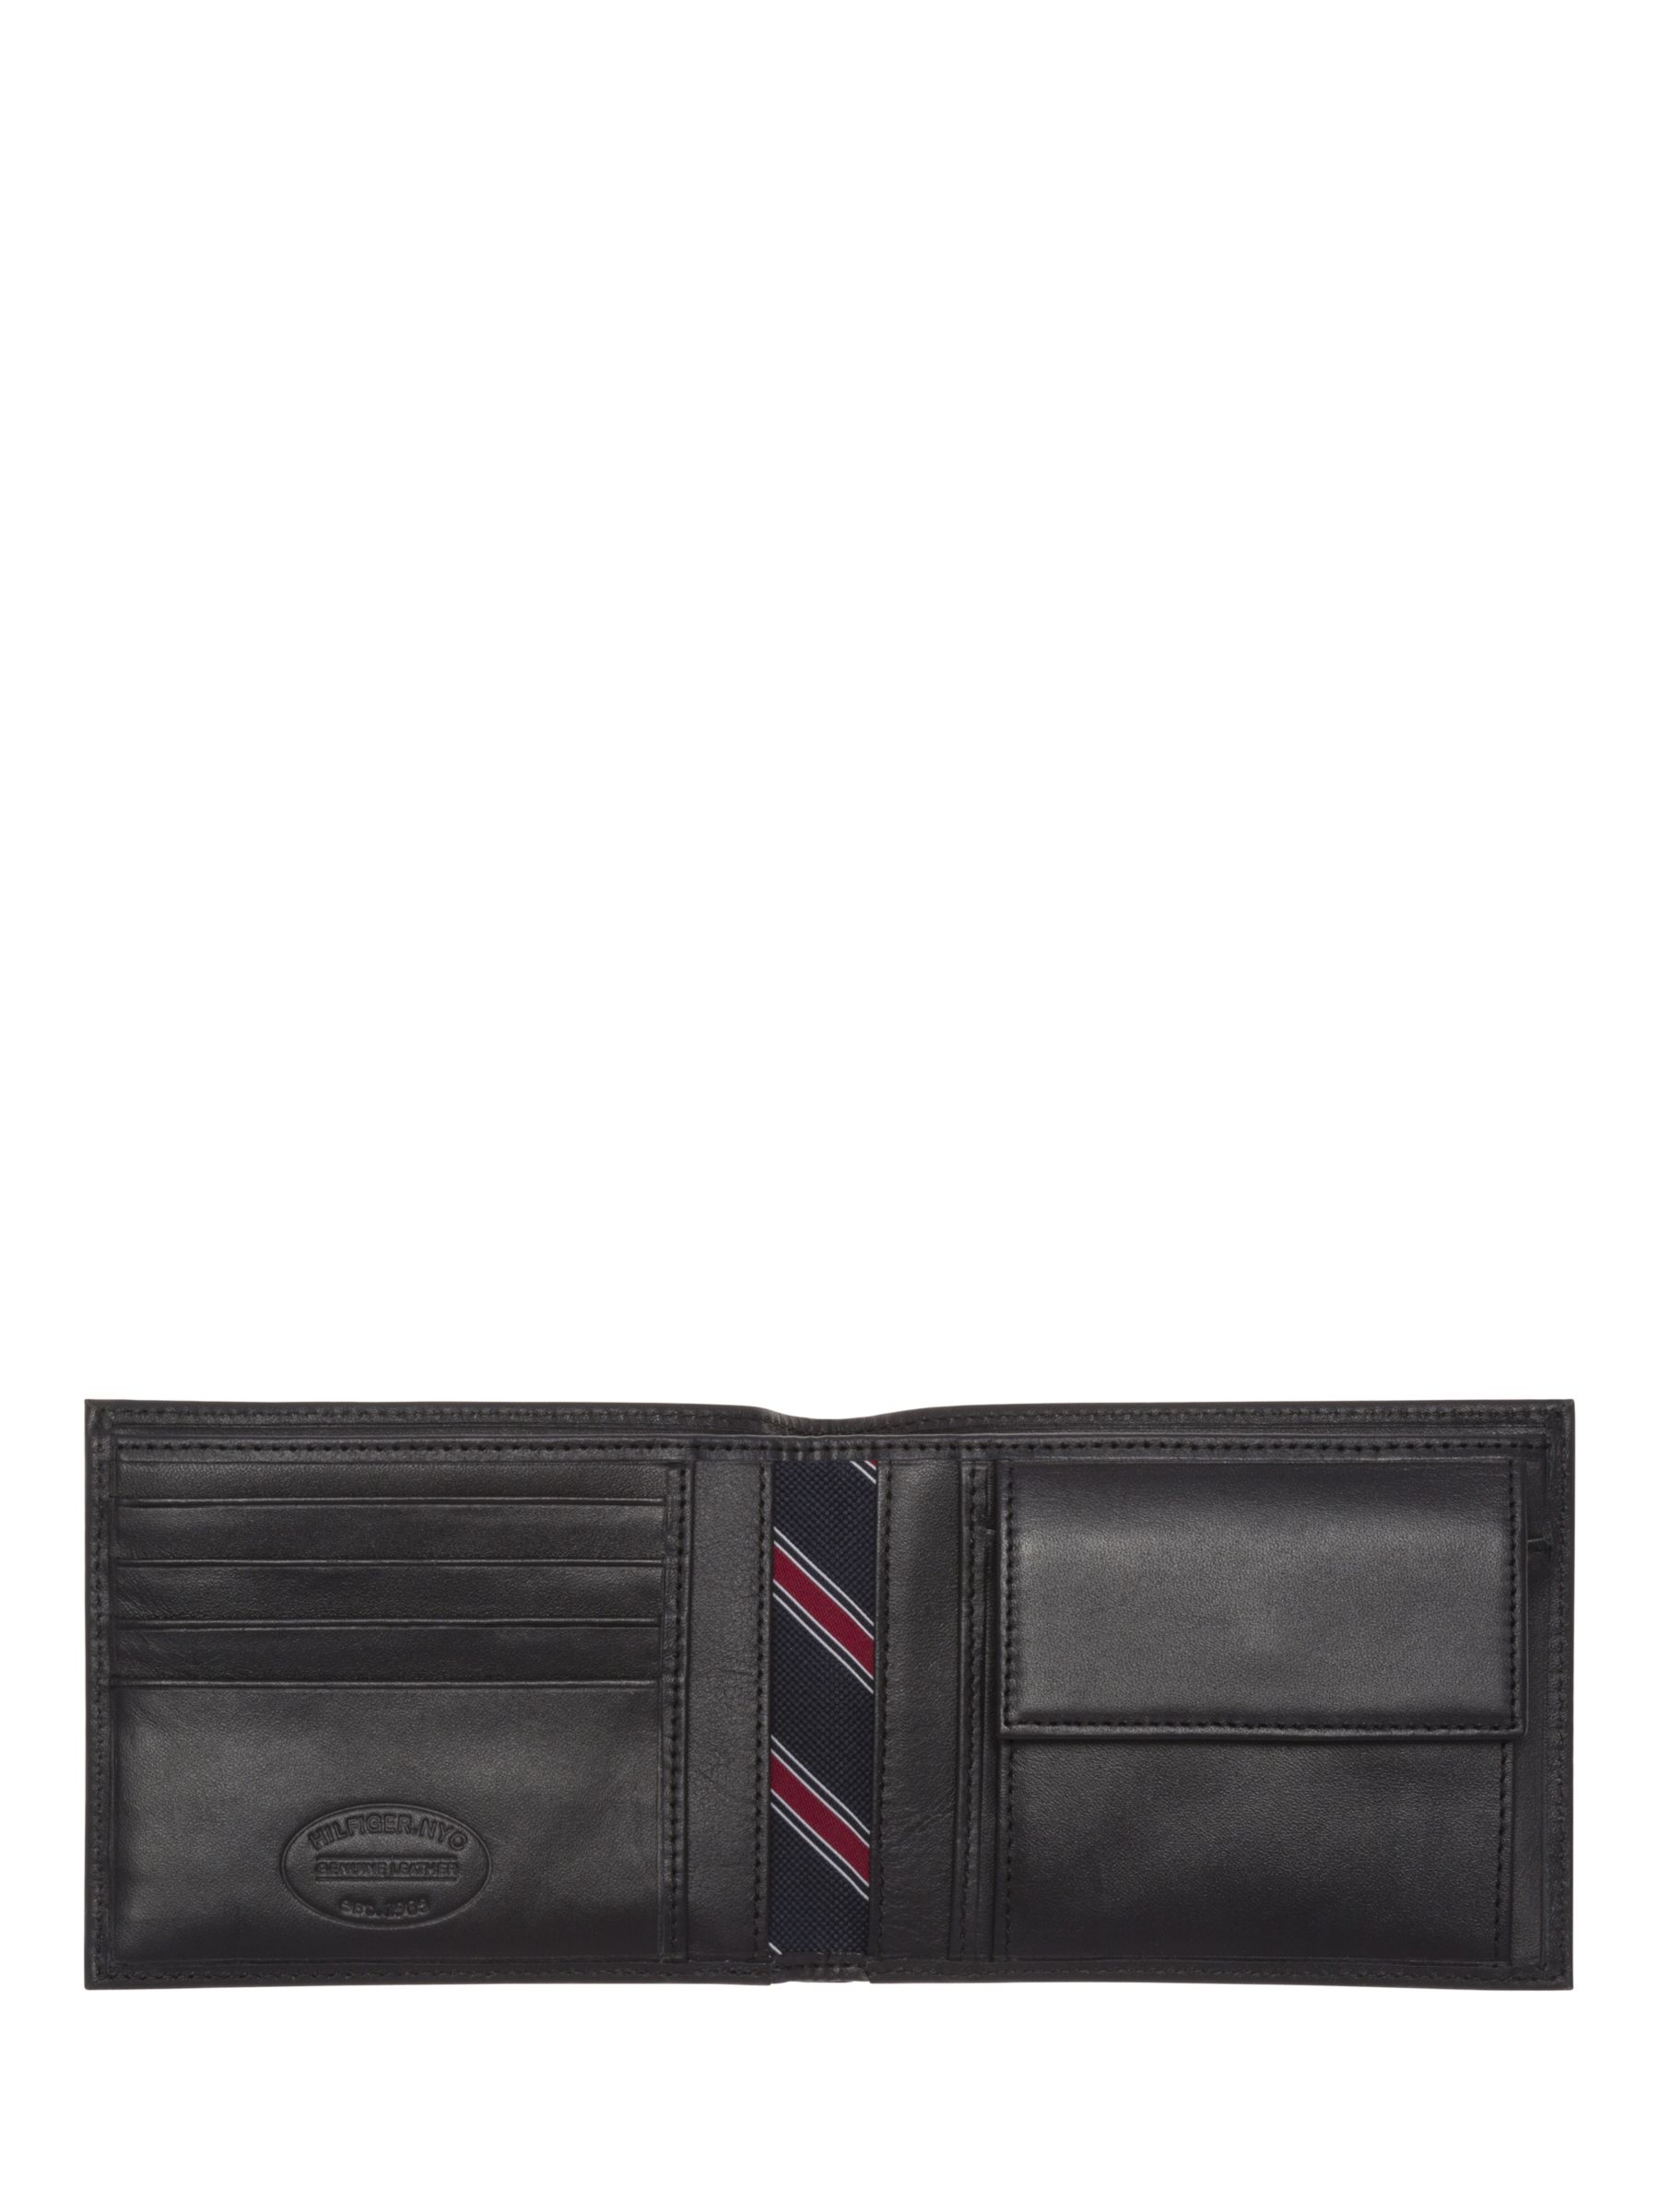 Tommy Hilfiger Eton Leather Coin Wallet, Black